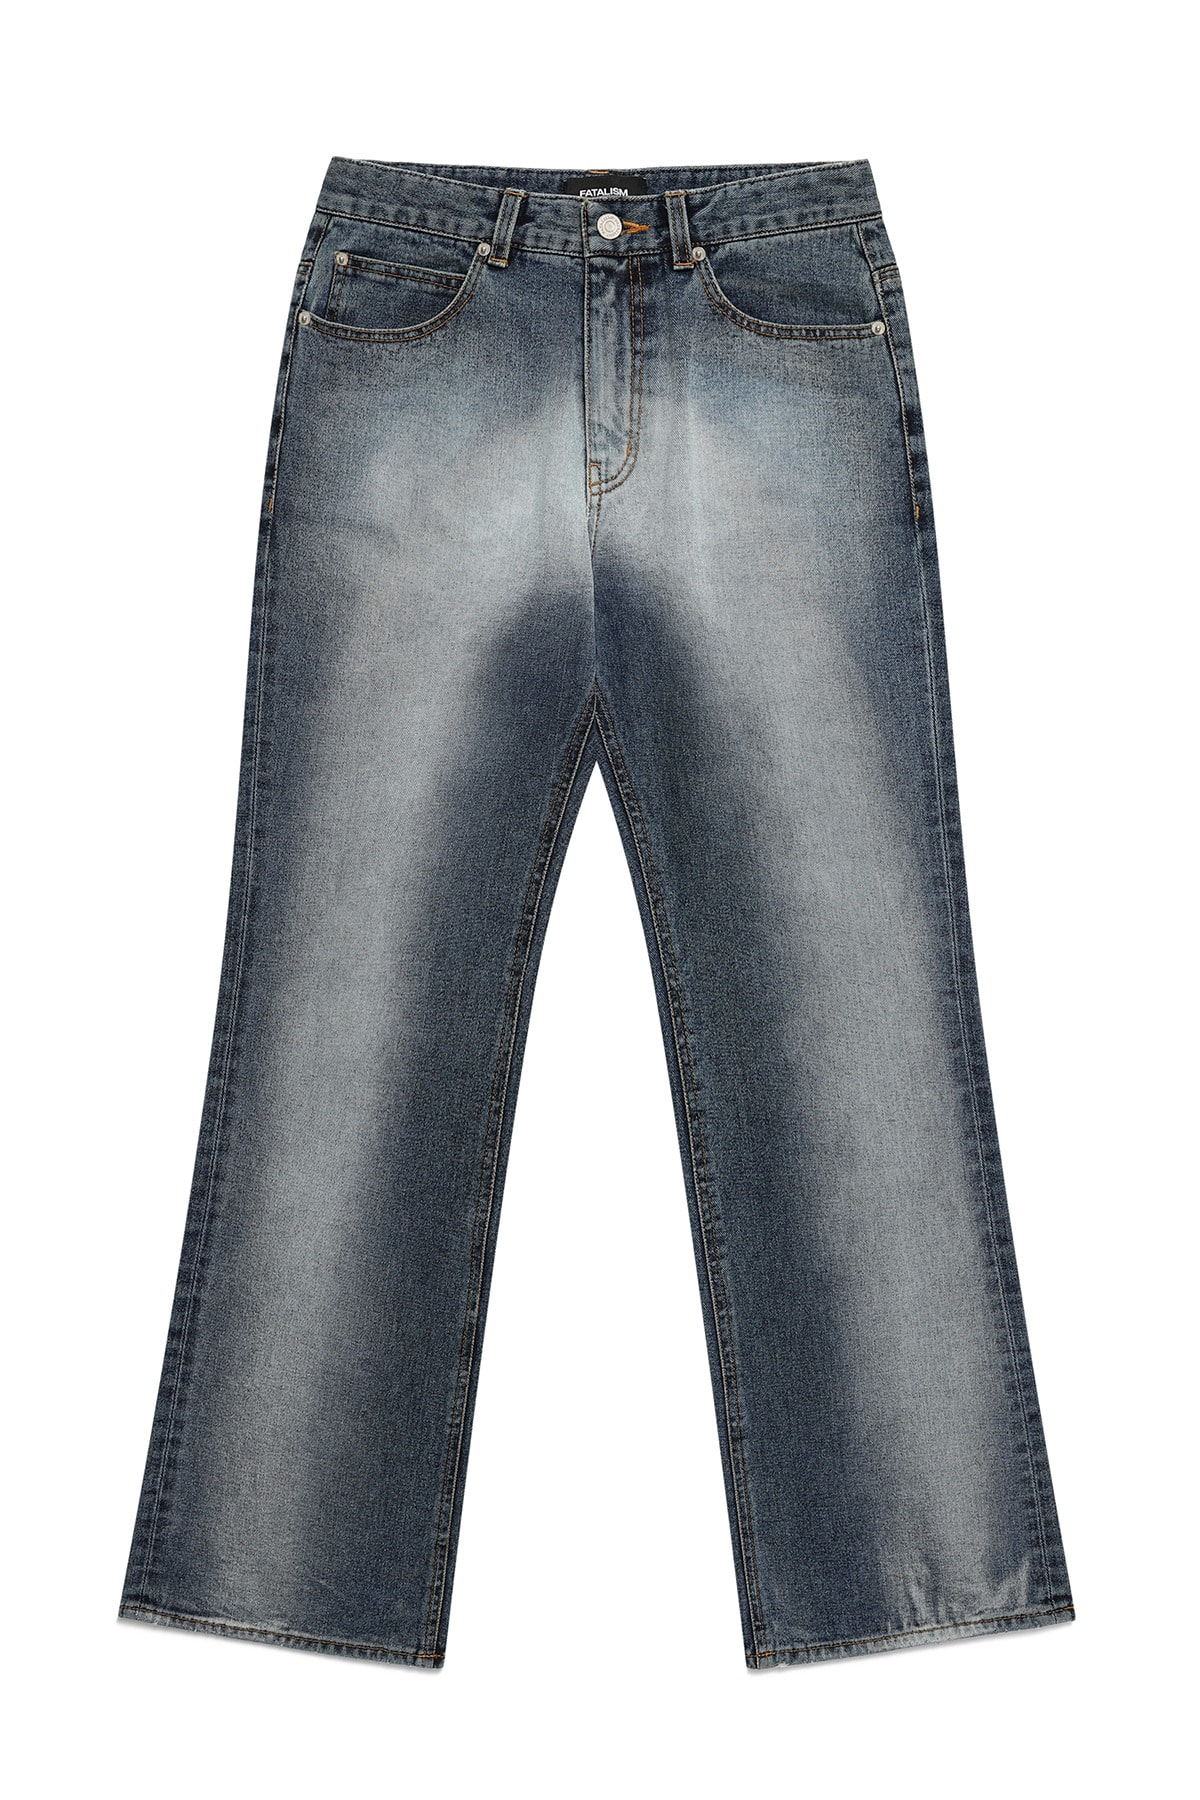 #0302 Spray gradation wide jeans(blue)